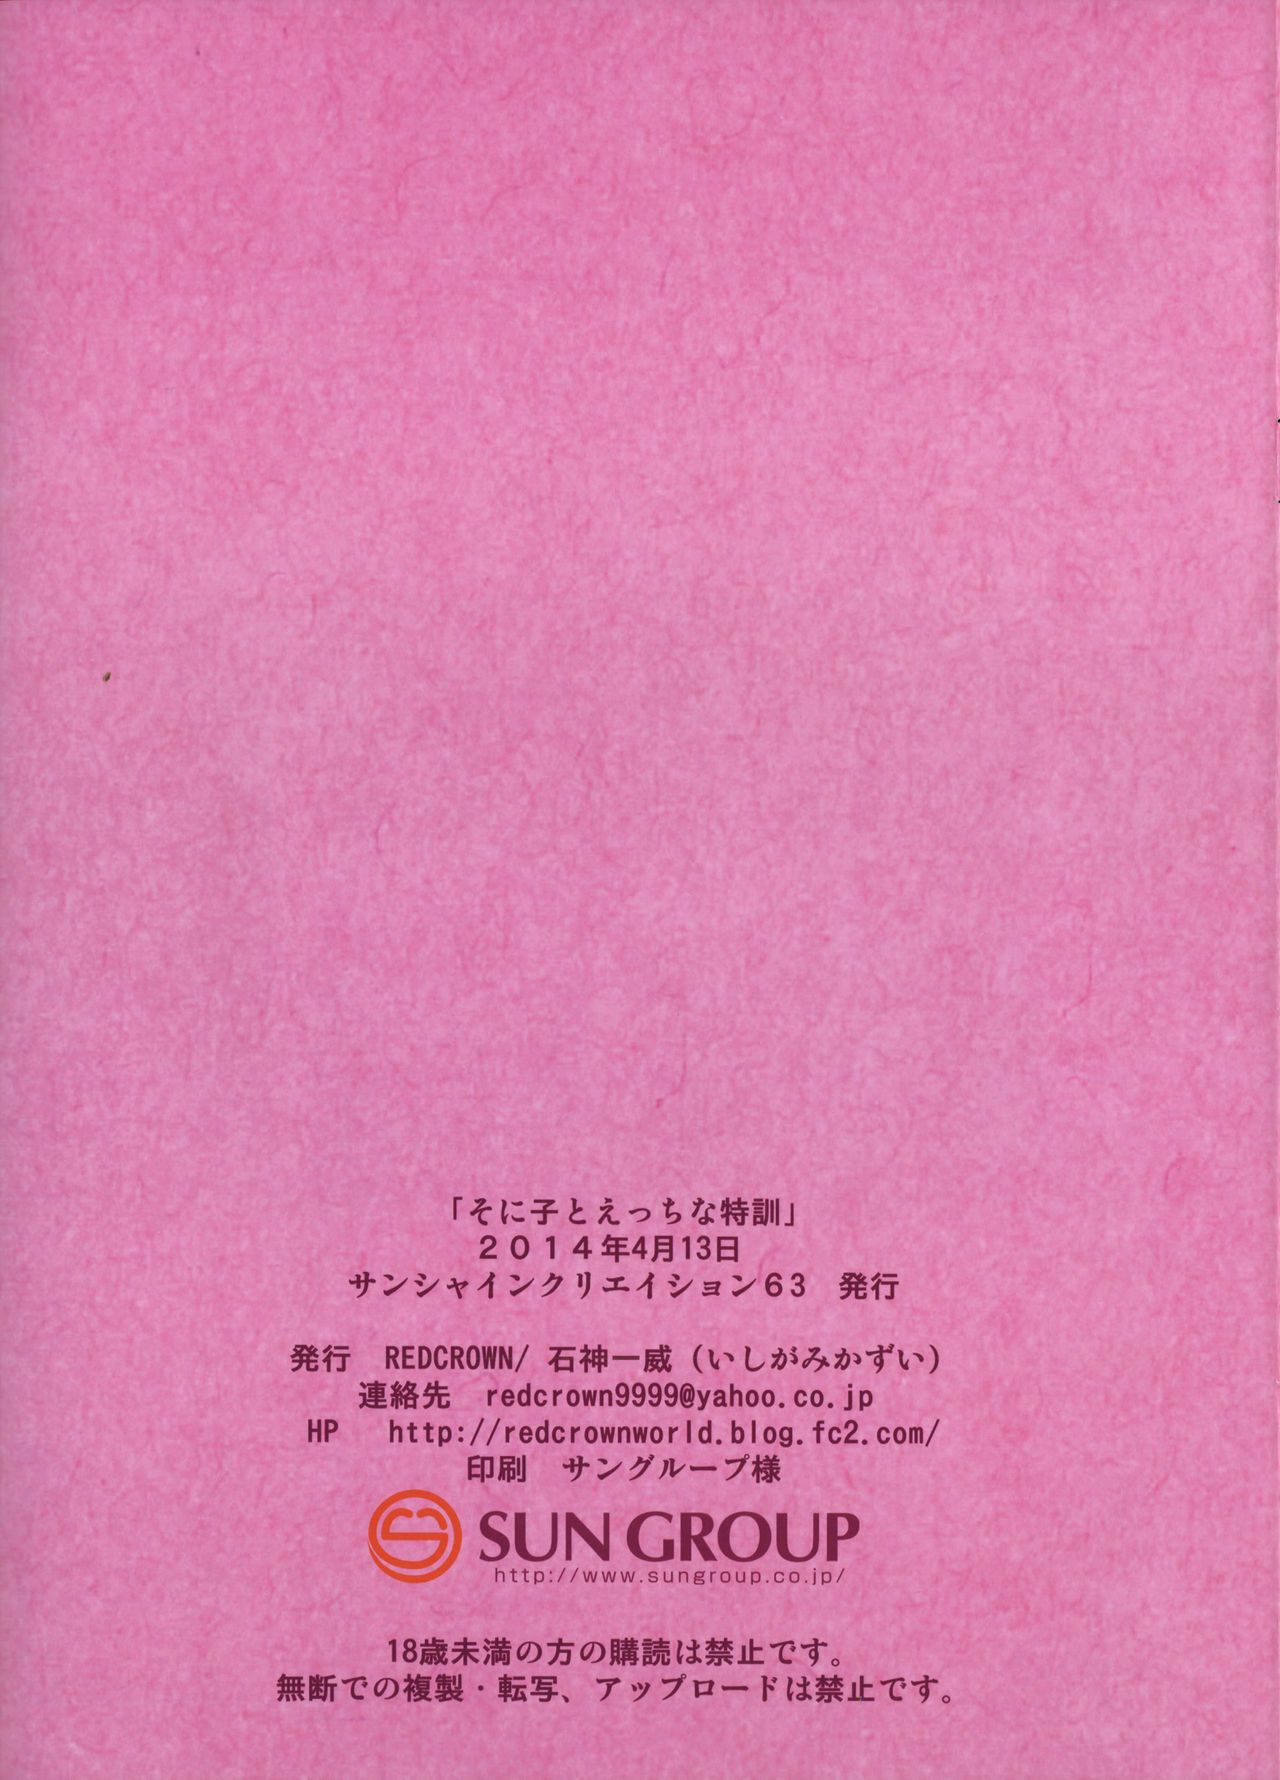 (sc63) Rot Krone (ishigami kazui) Sonico zu Ecchi na tokkun Geilste Ausbildung Mit Sonico (super sonico) biribiri